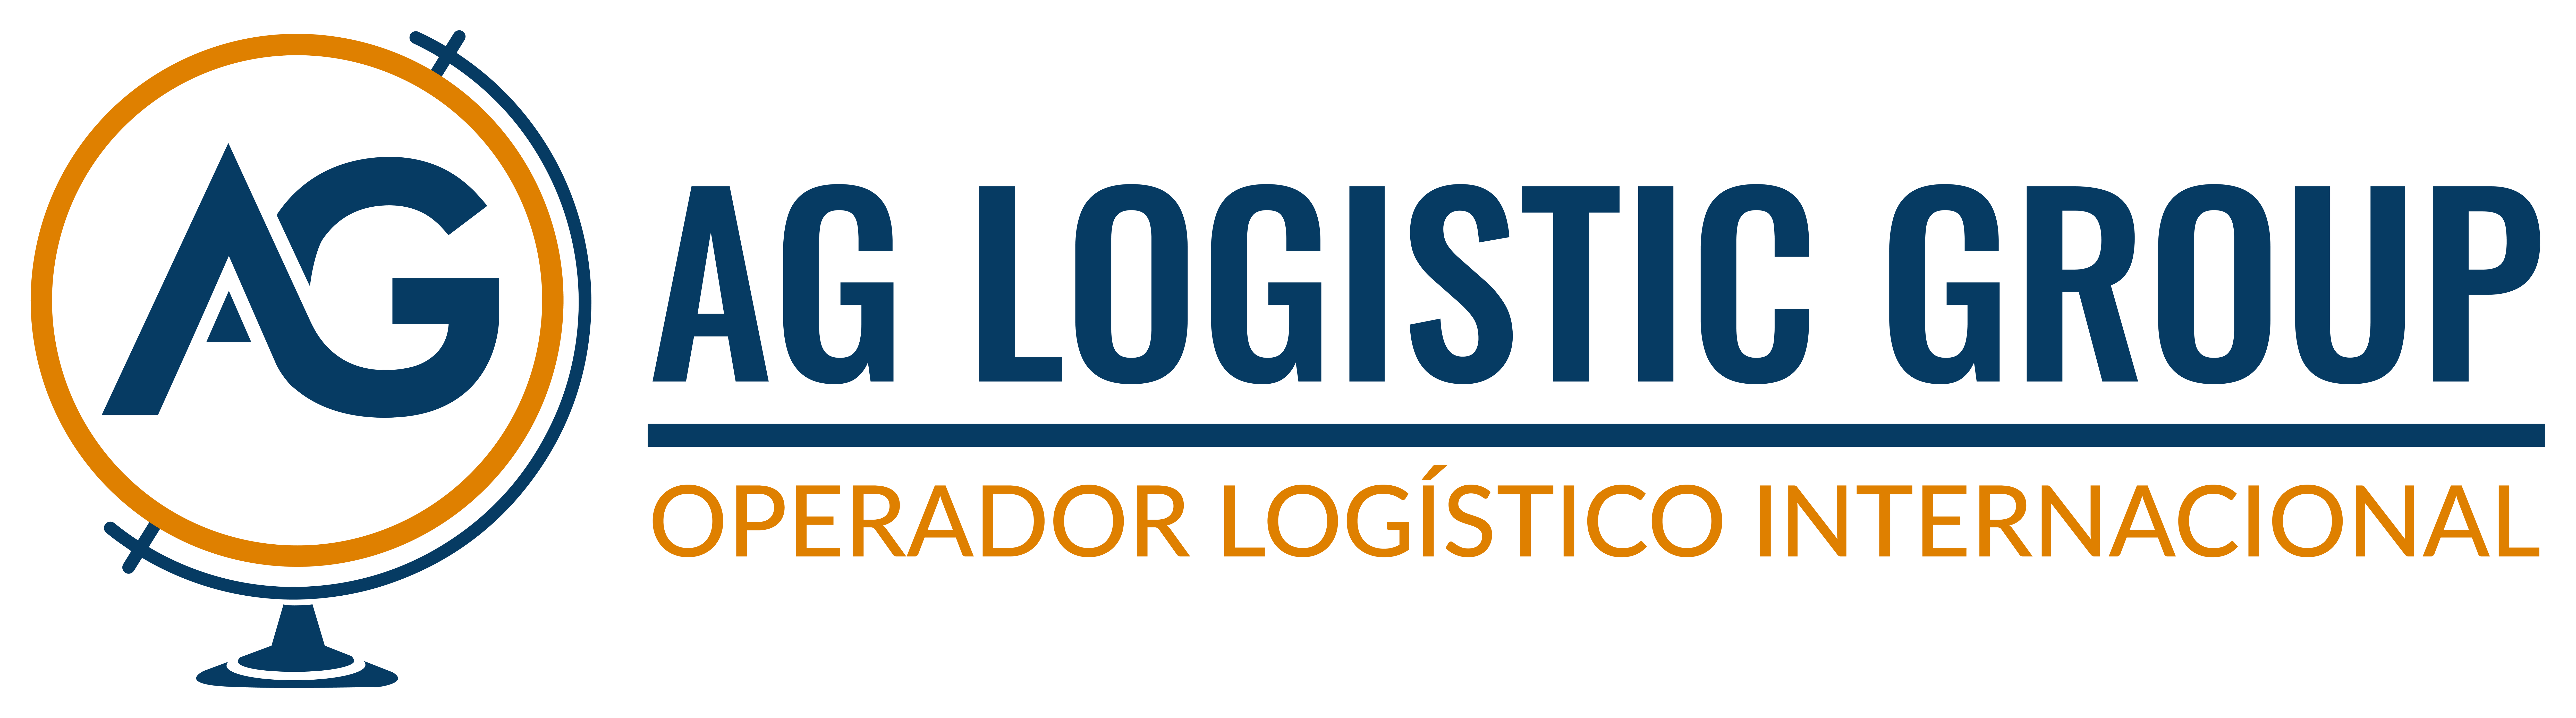 AG Logistic Group